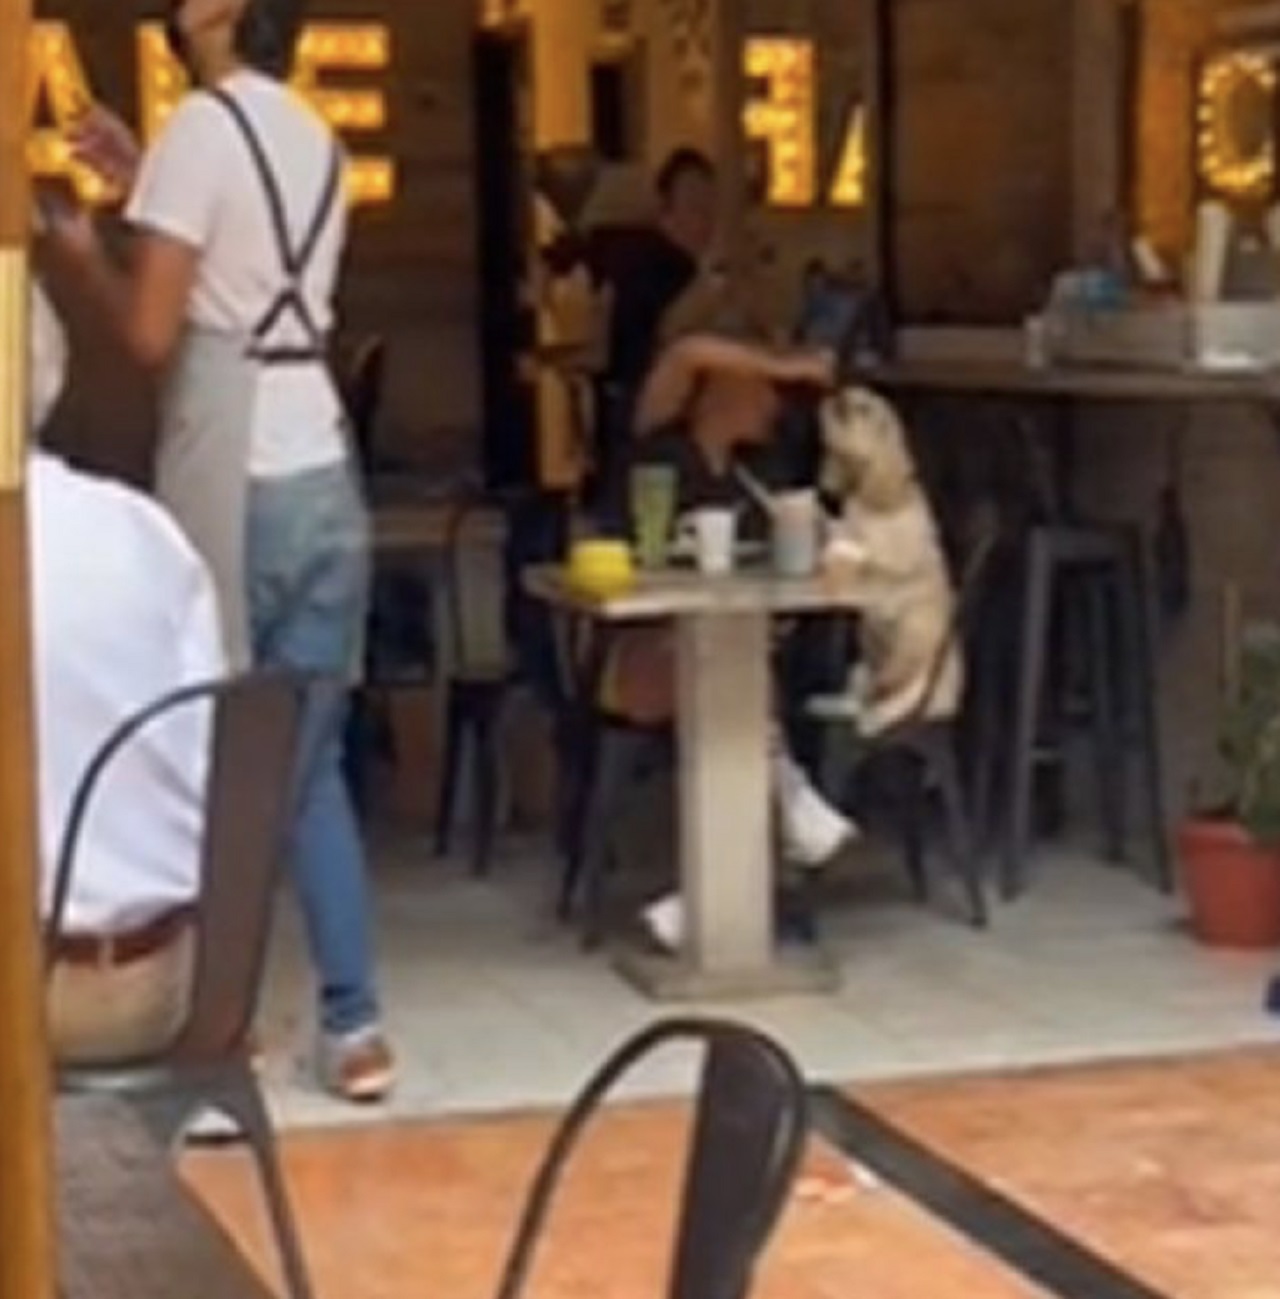 cane e padrona mangiano insieme al tavolo